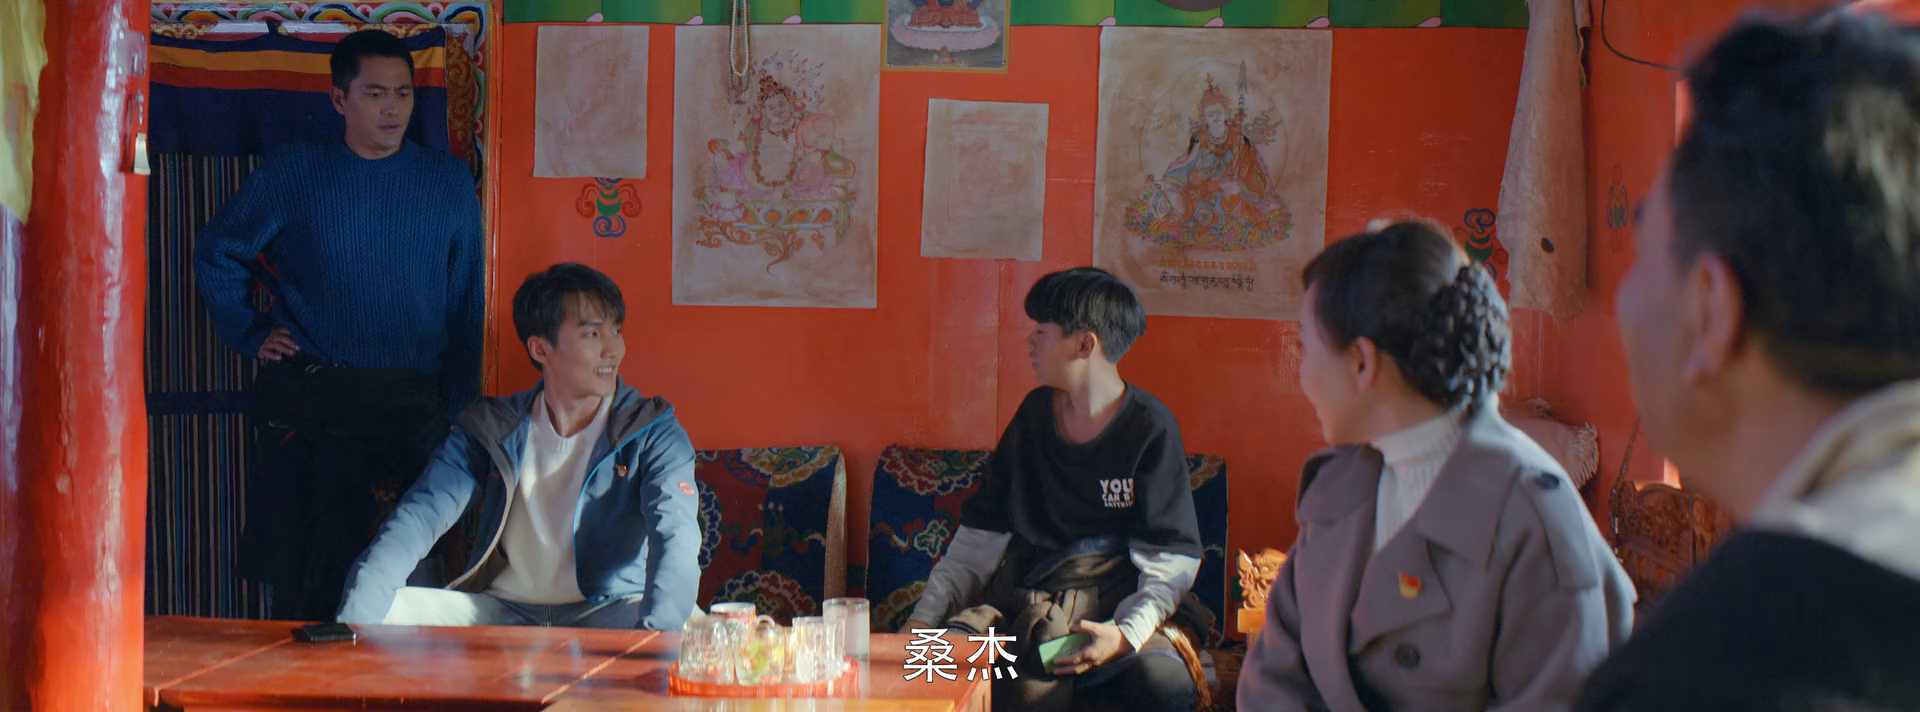 [BT下载][我来自北京之玛尼堆的秋天][WEB-MP4/1.19GB][国语配音/中文字幕][1080P][扶贫,主旋律,西藏,爱国主义,援藏,喜剧,剧情]